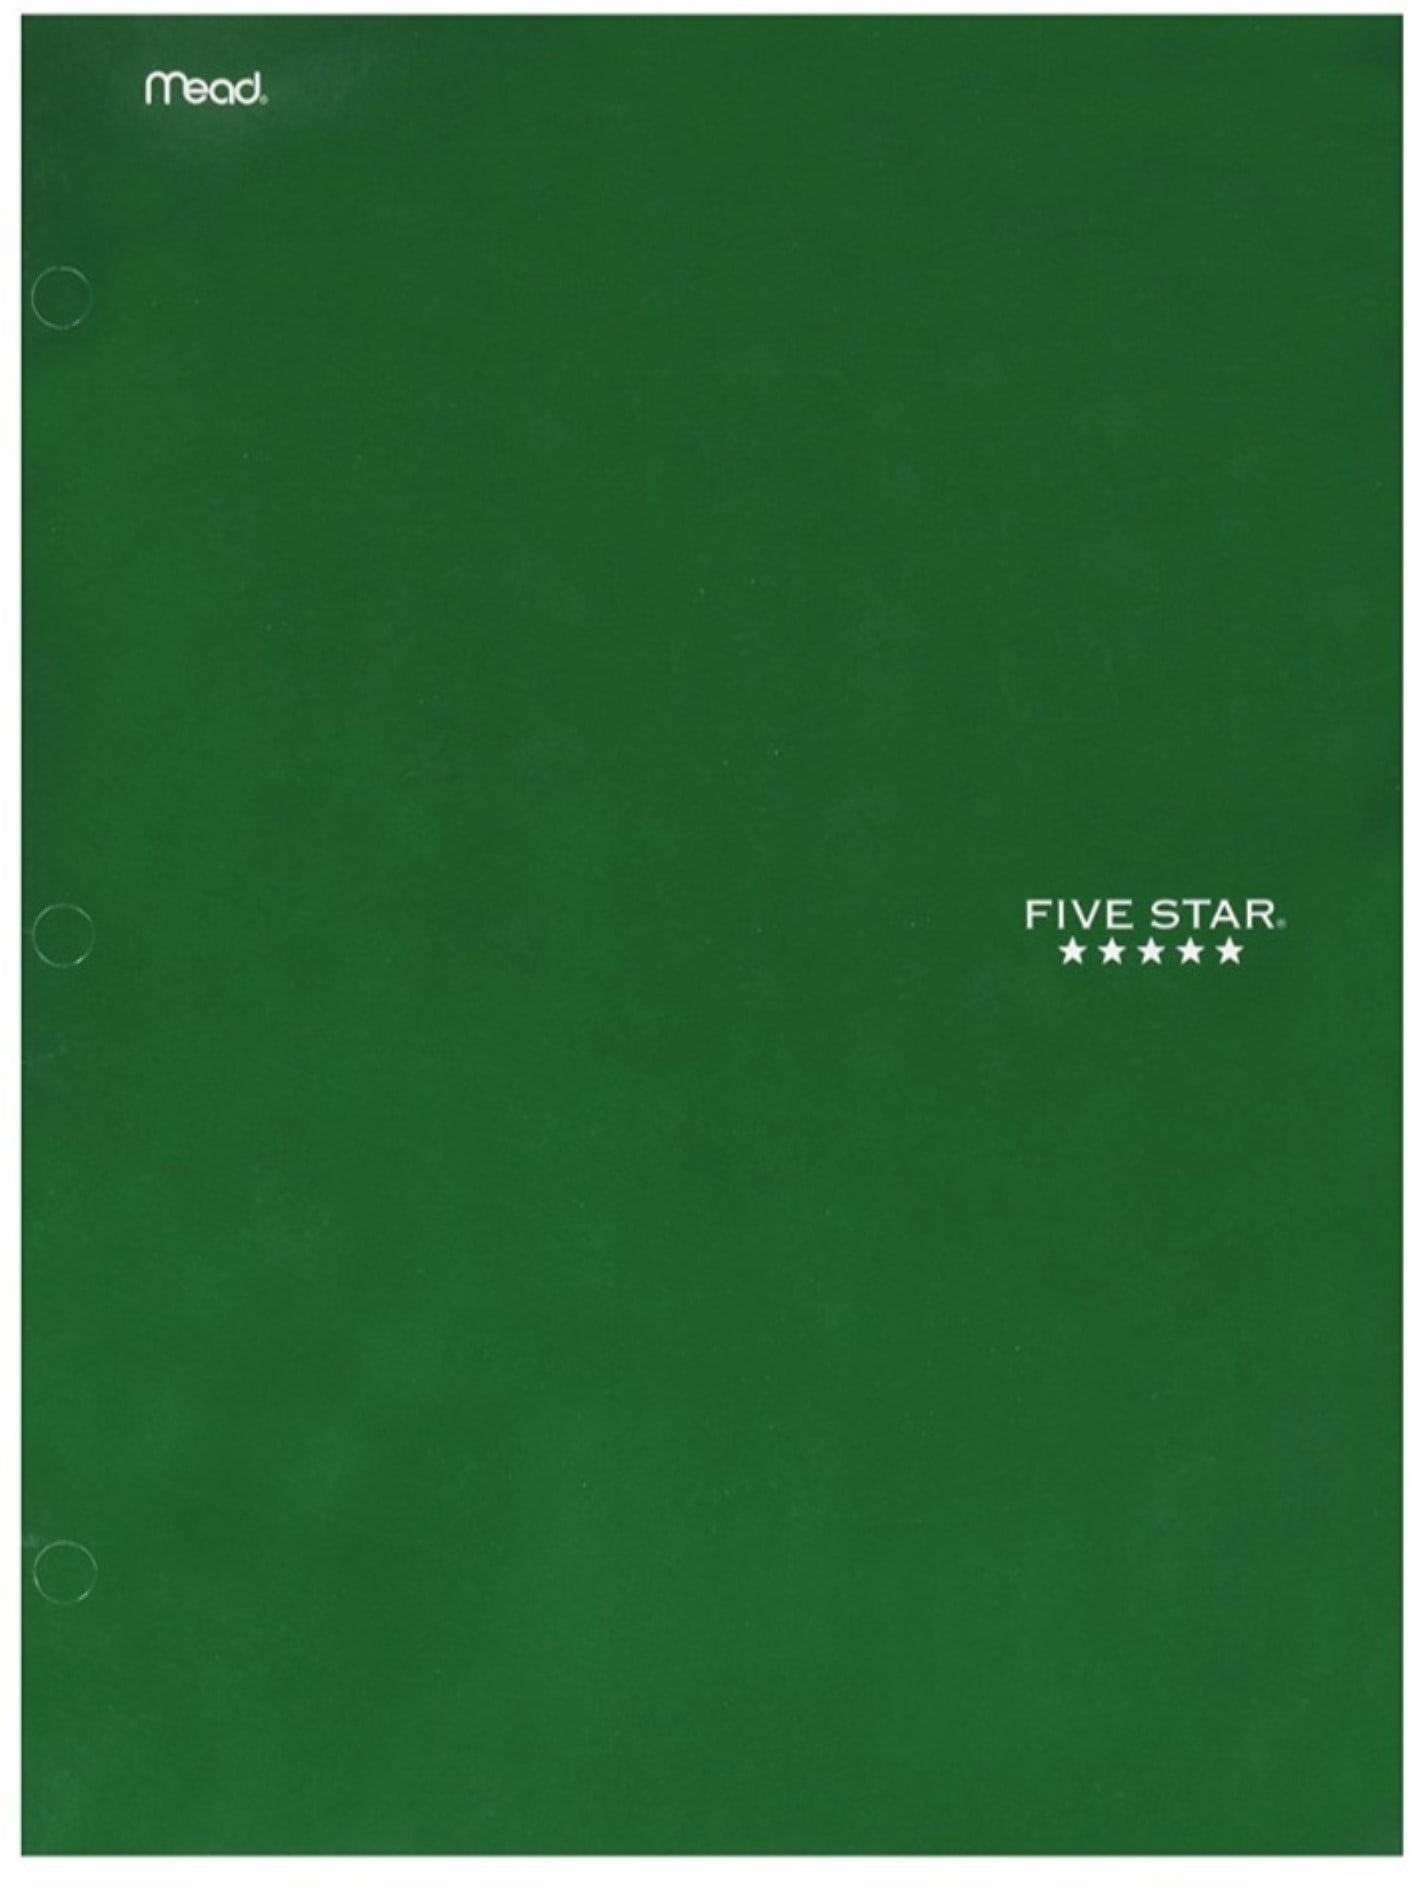 You Pick Color Mead Five Star 4 Pocket Laminated Paper Folder $5.05-$2.27 each 